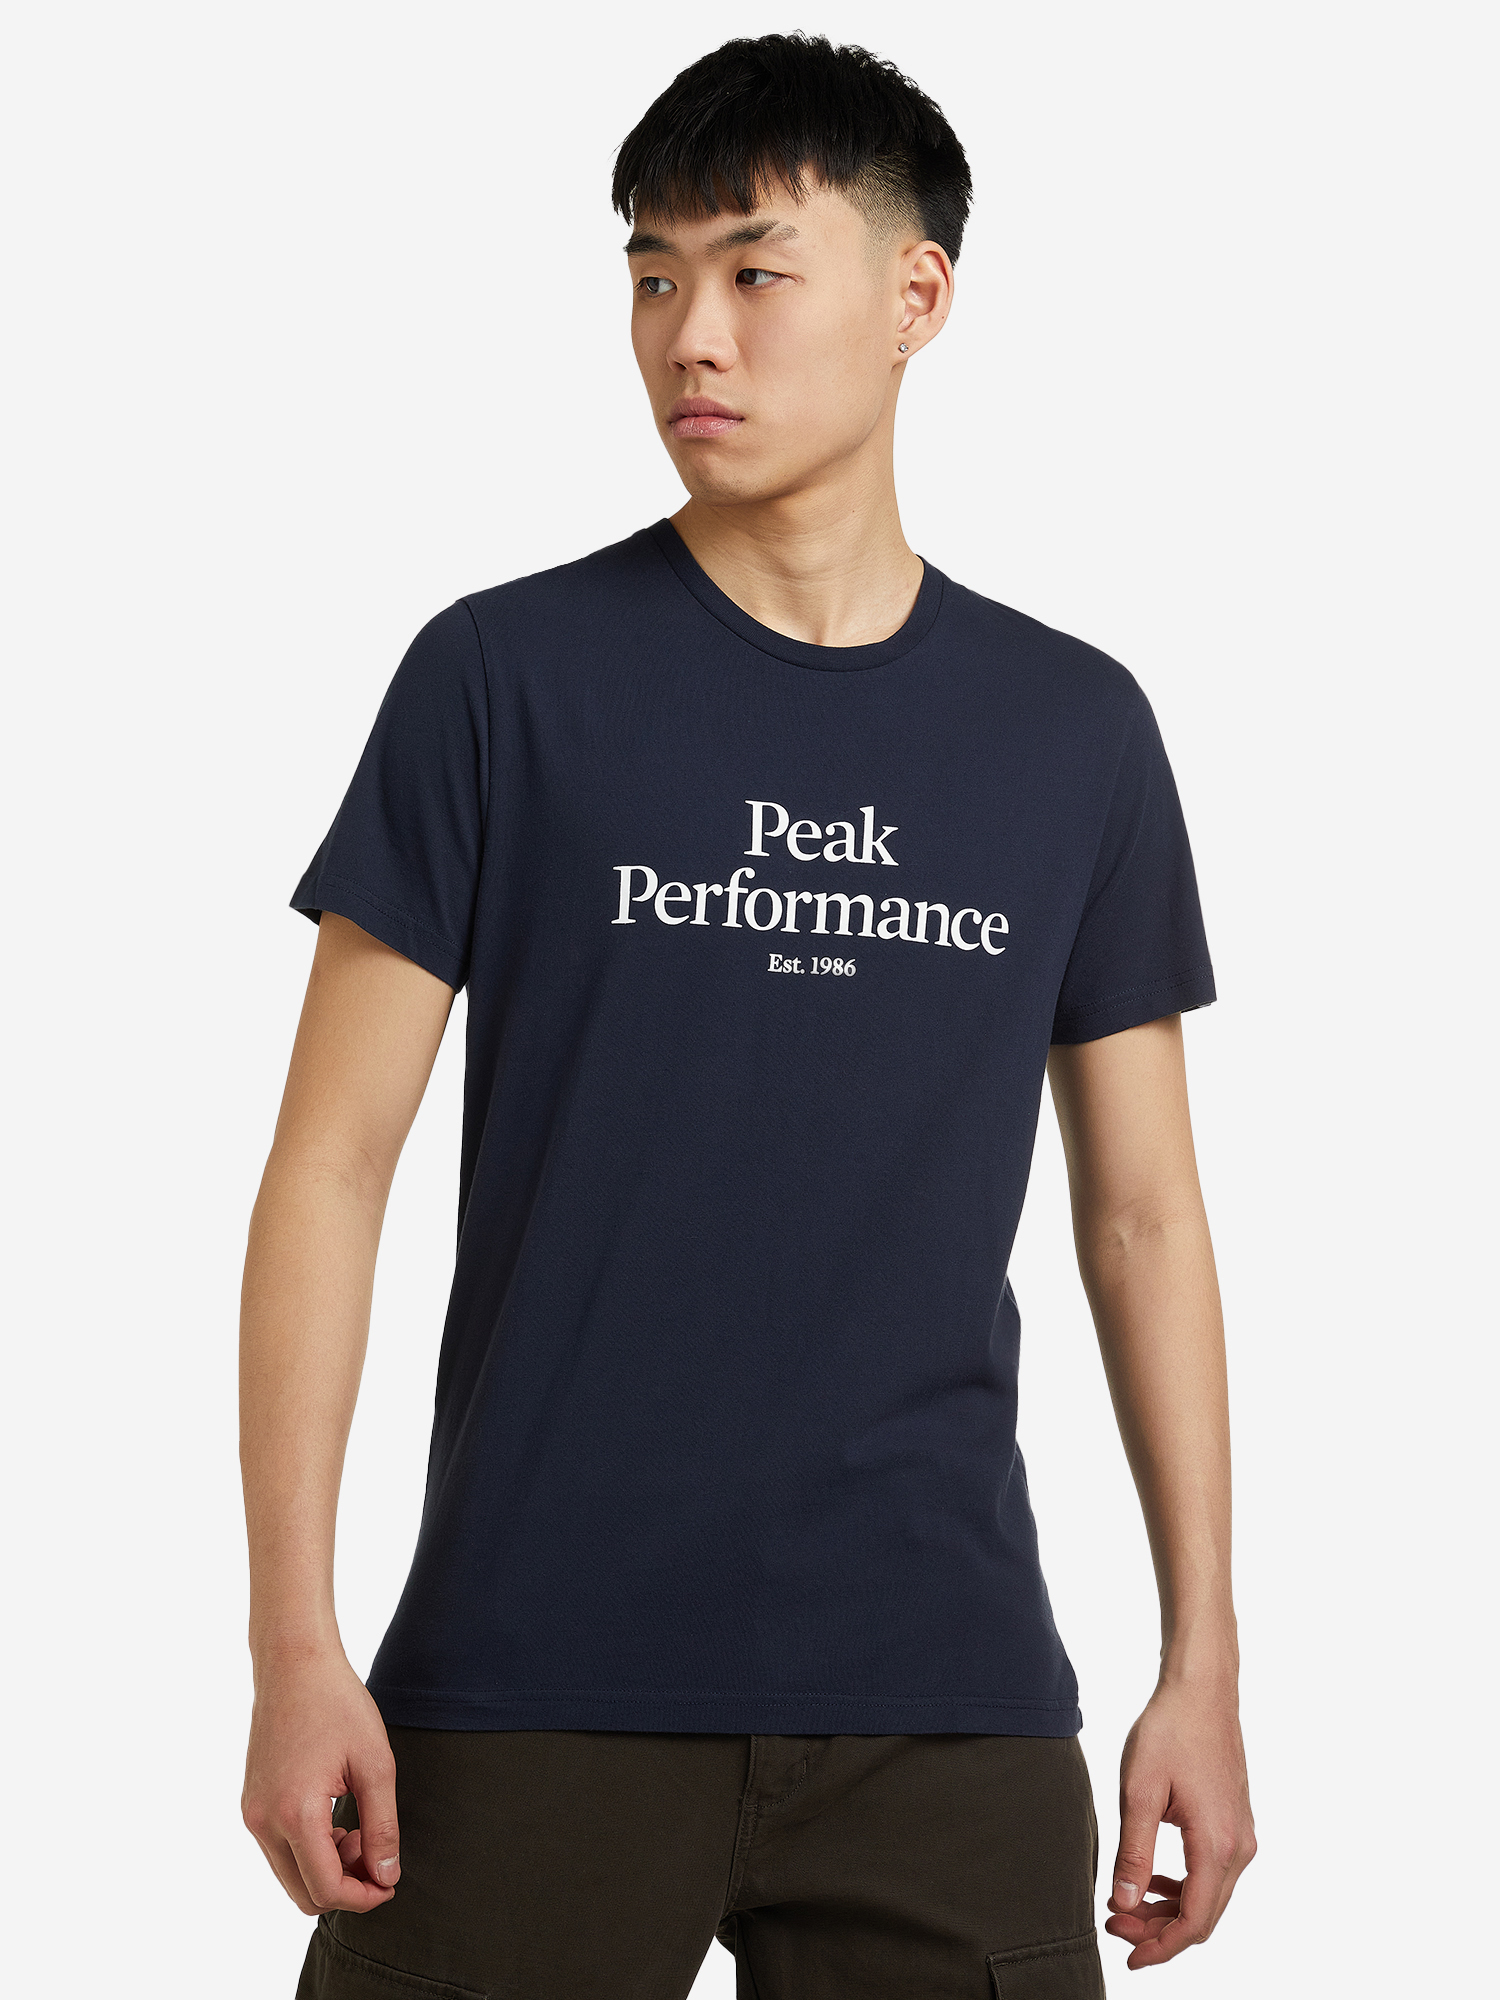 Футболка мужская Peak Performance Original, Синий рубашка мужская peak performance moment синий